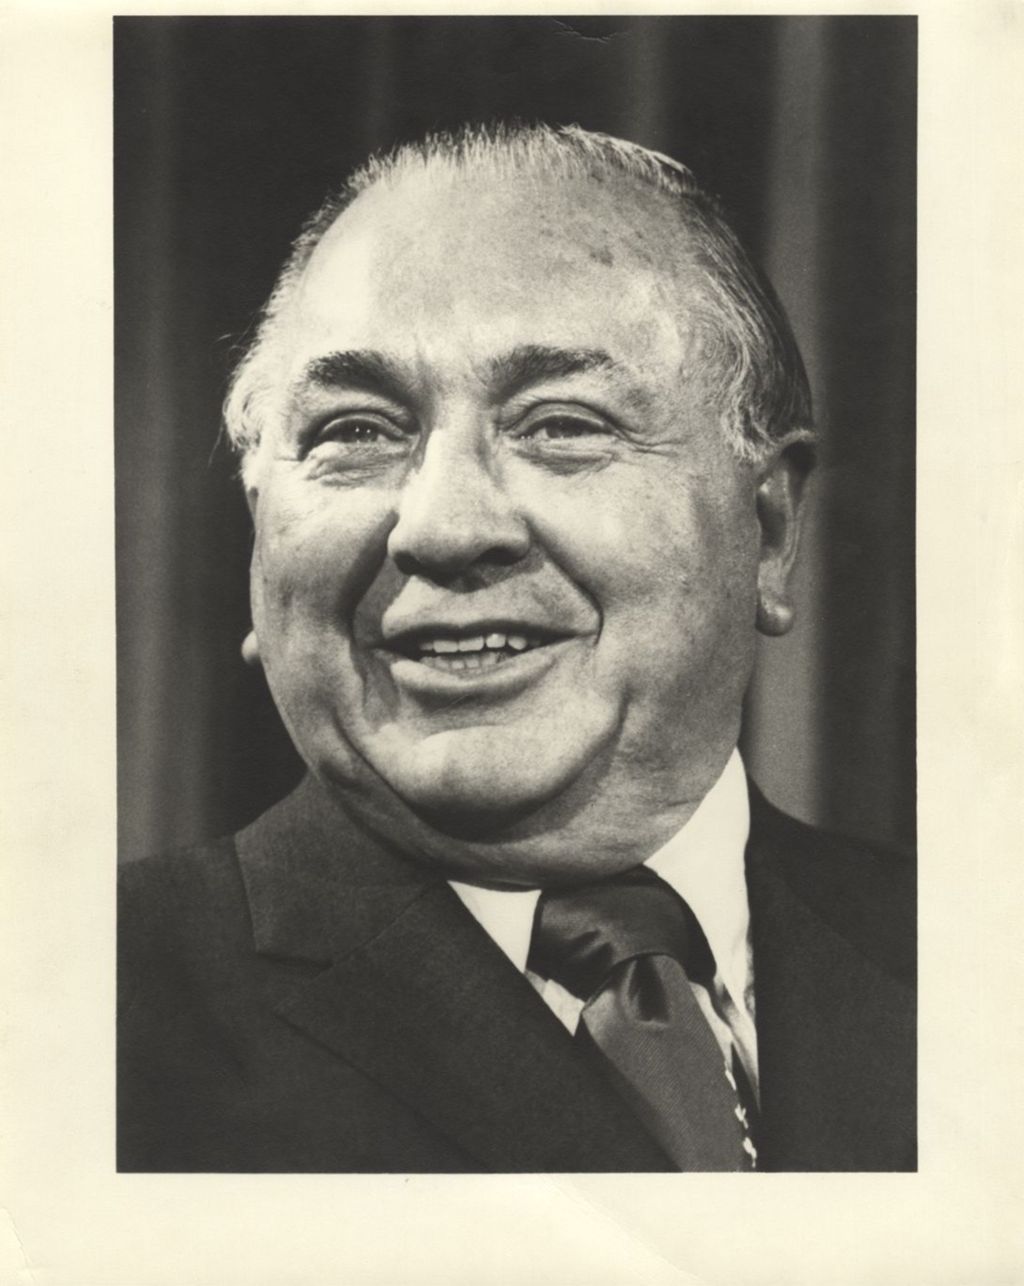 Portrait of Richard J. Daley